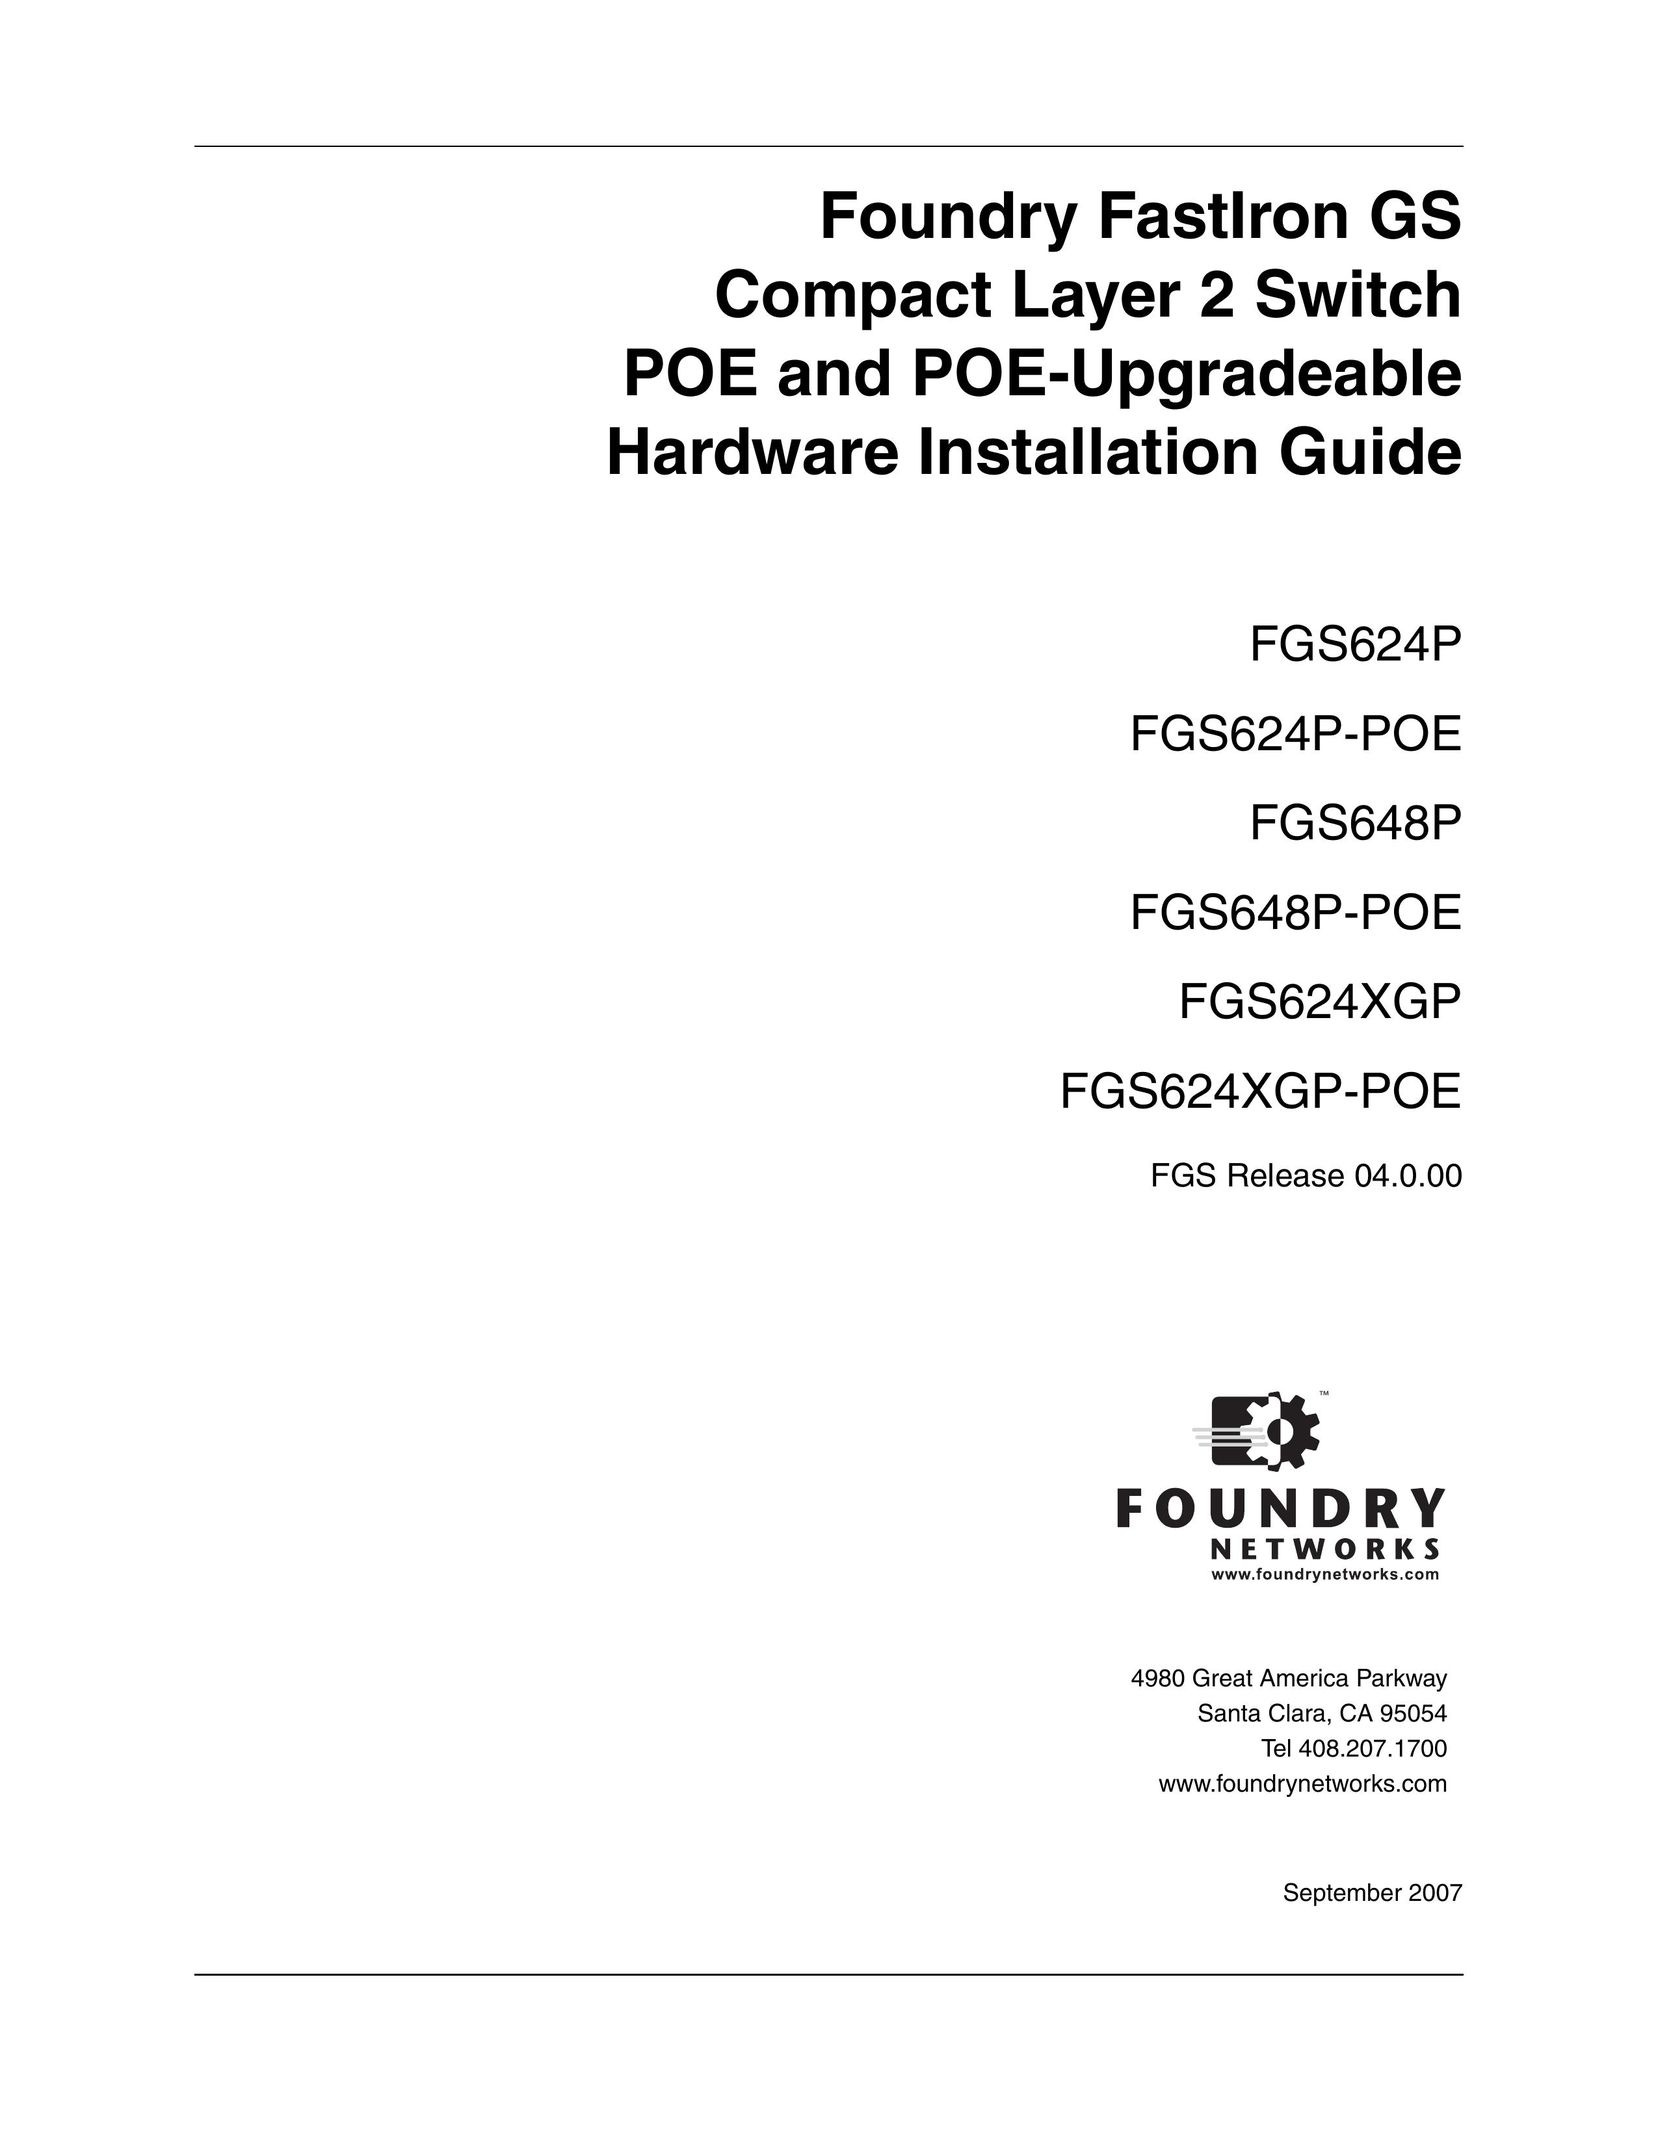 Foundry Networks FGS624XGP-POE Network Hardware User Manual